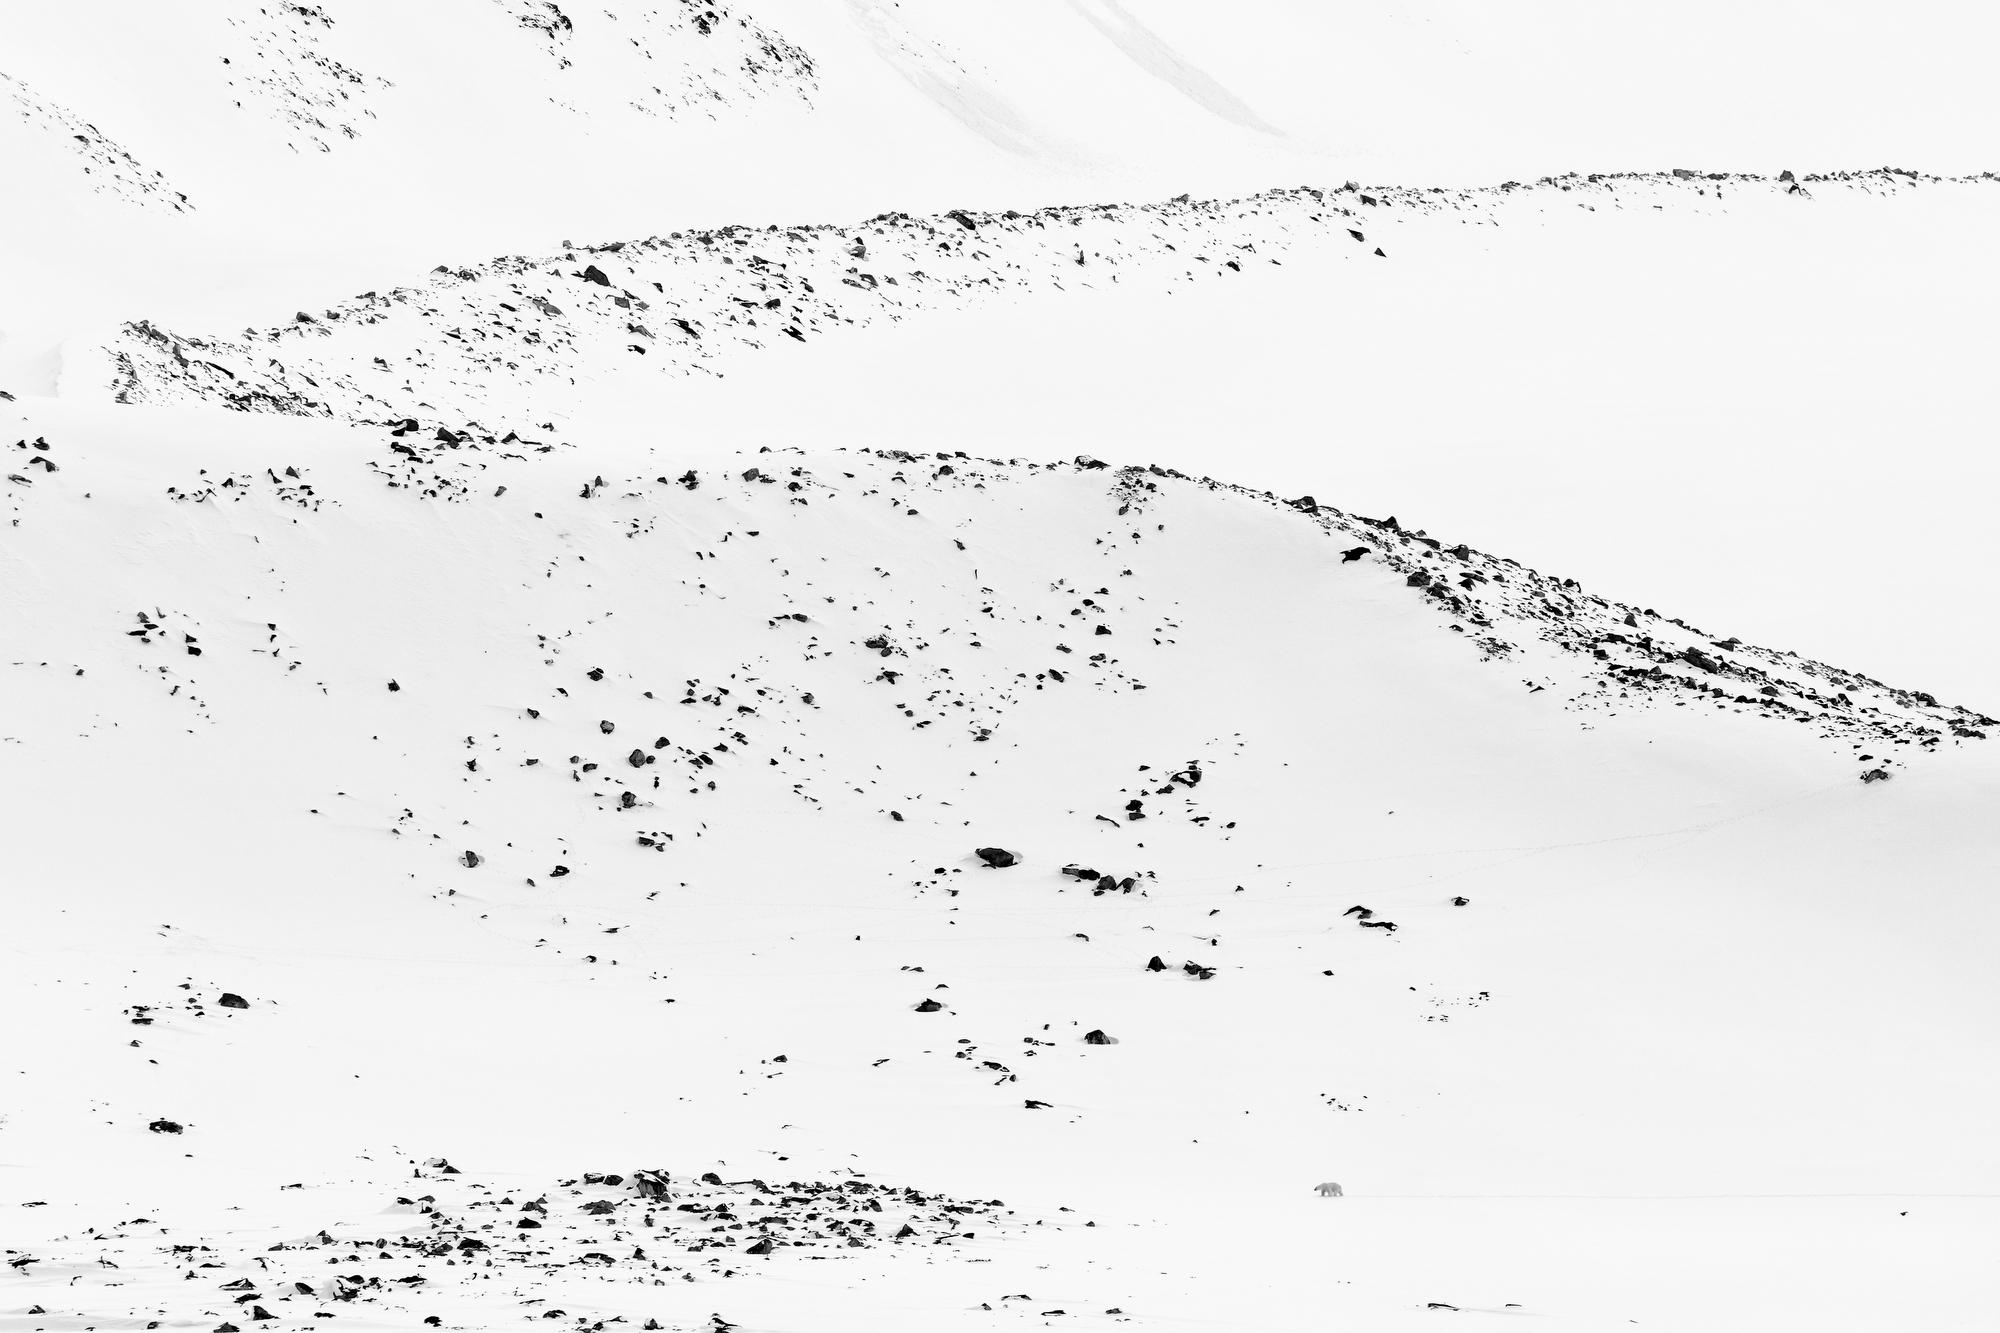 Paul Nicklen Landscape Photograph - Lost in White